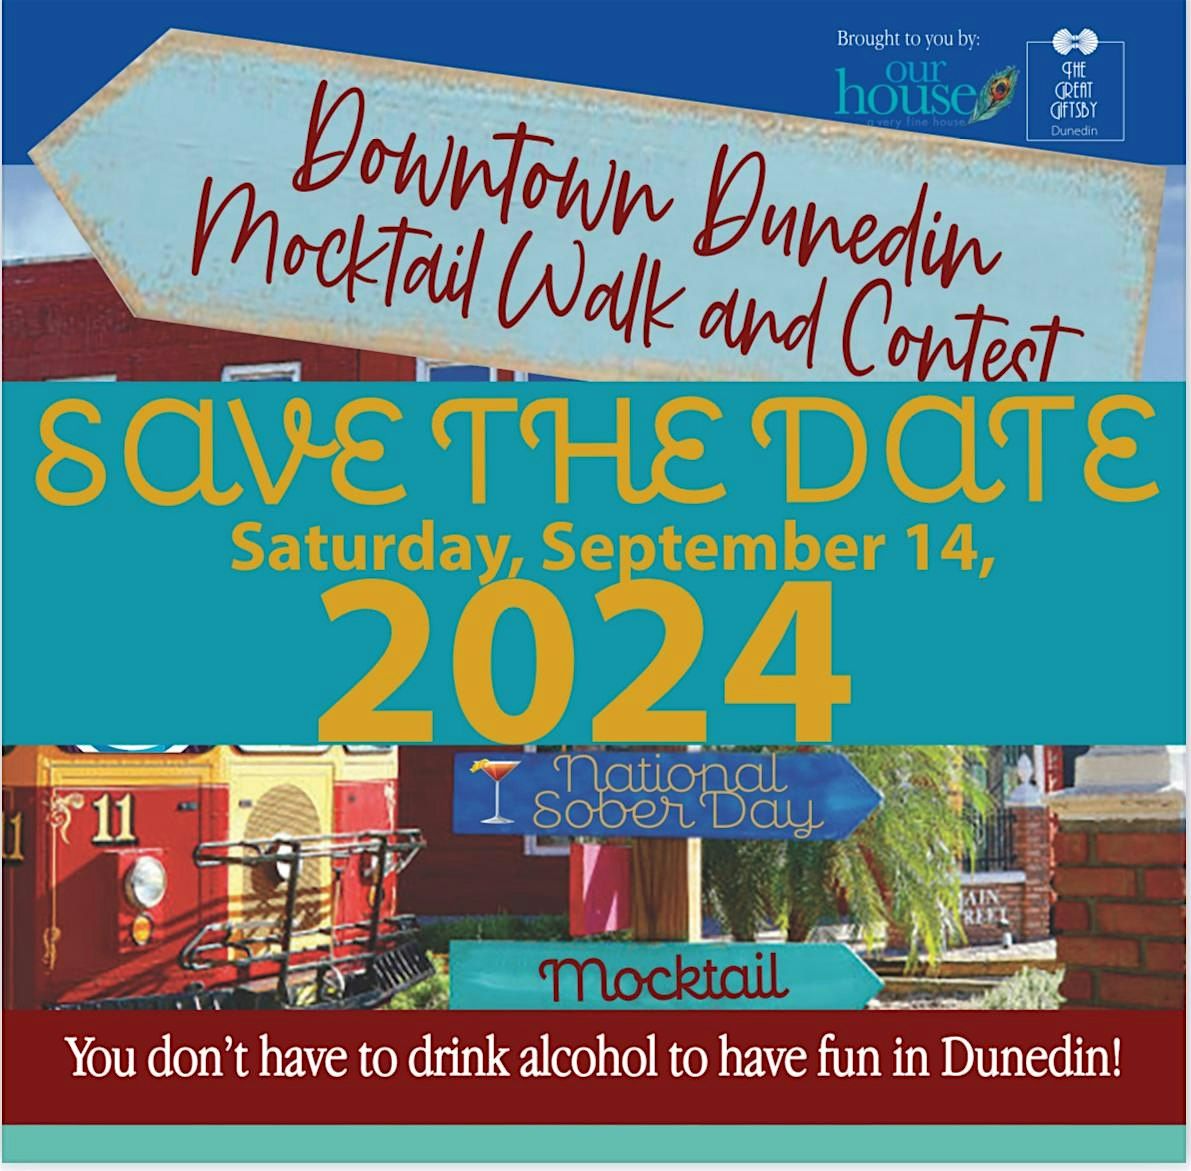 2nd Annual Downtown Dunedin Mocktail Walk & Contest